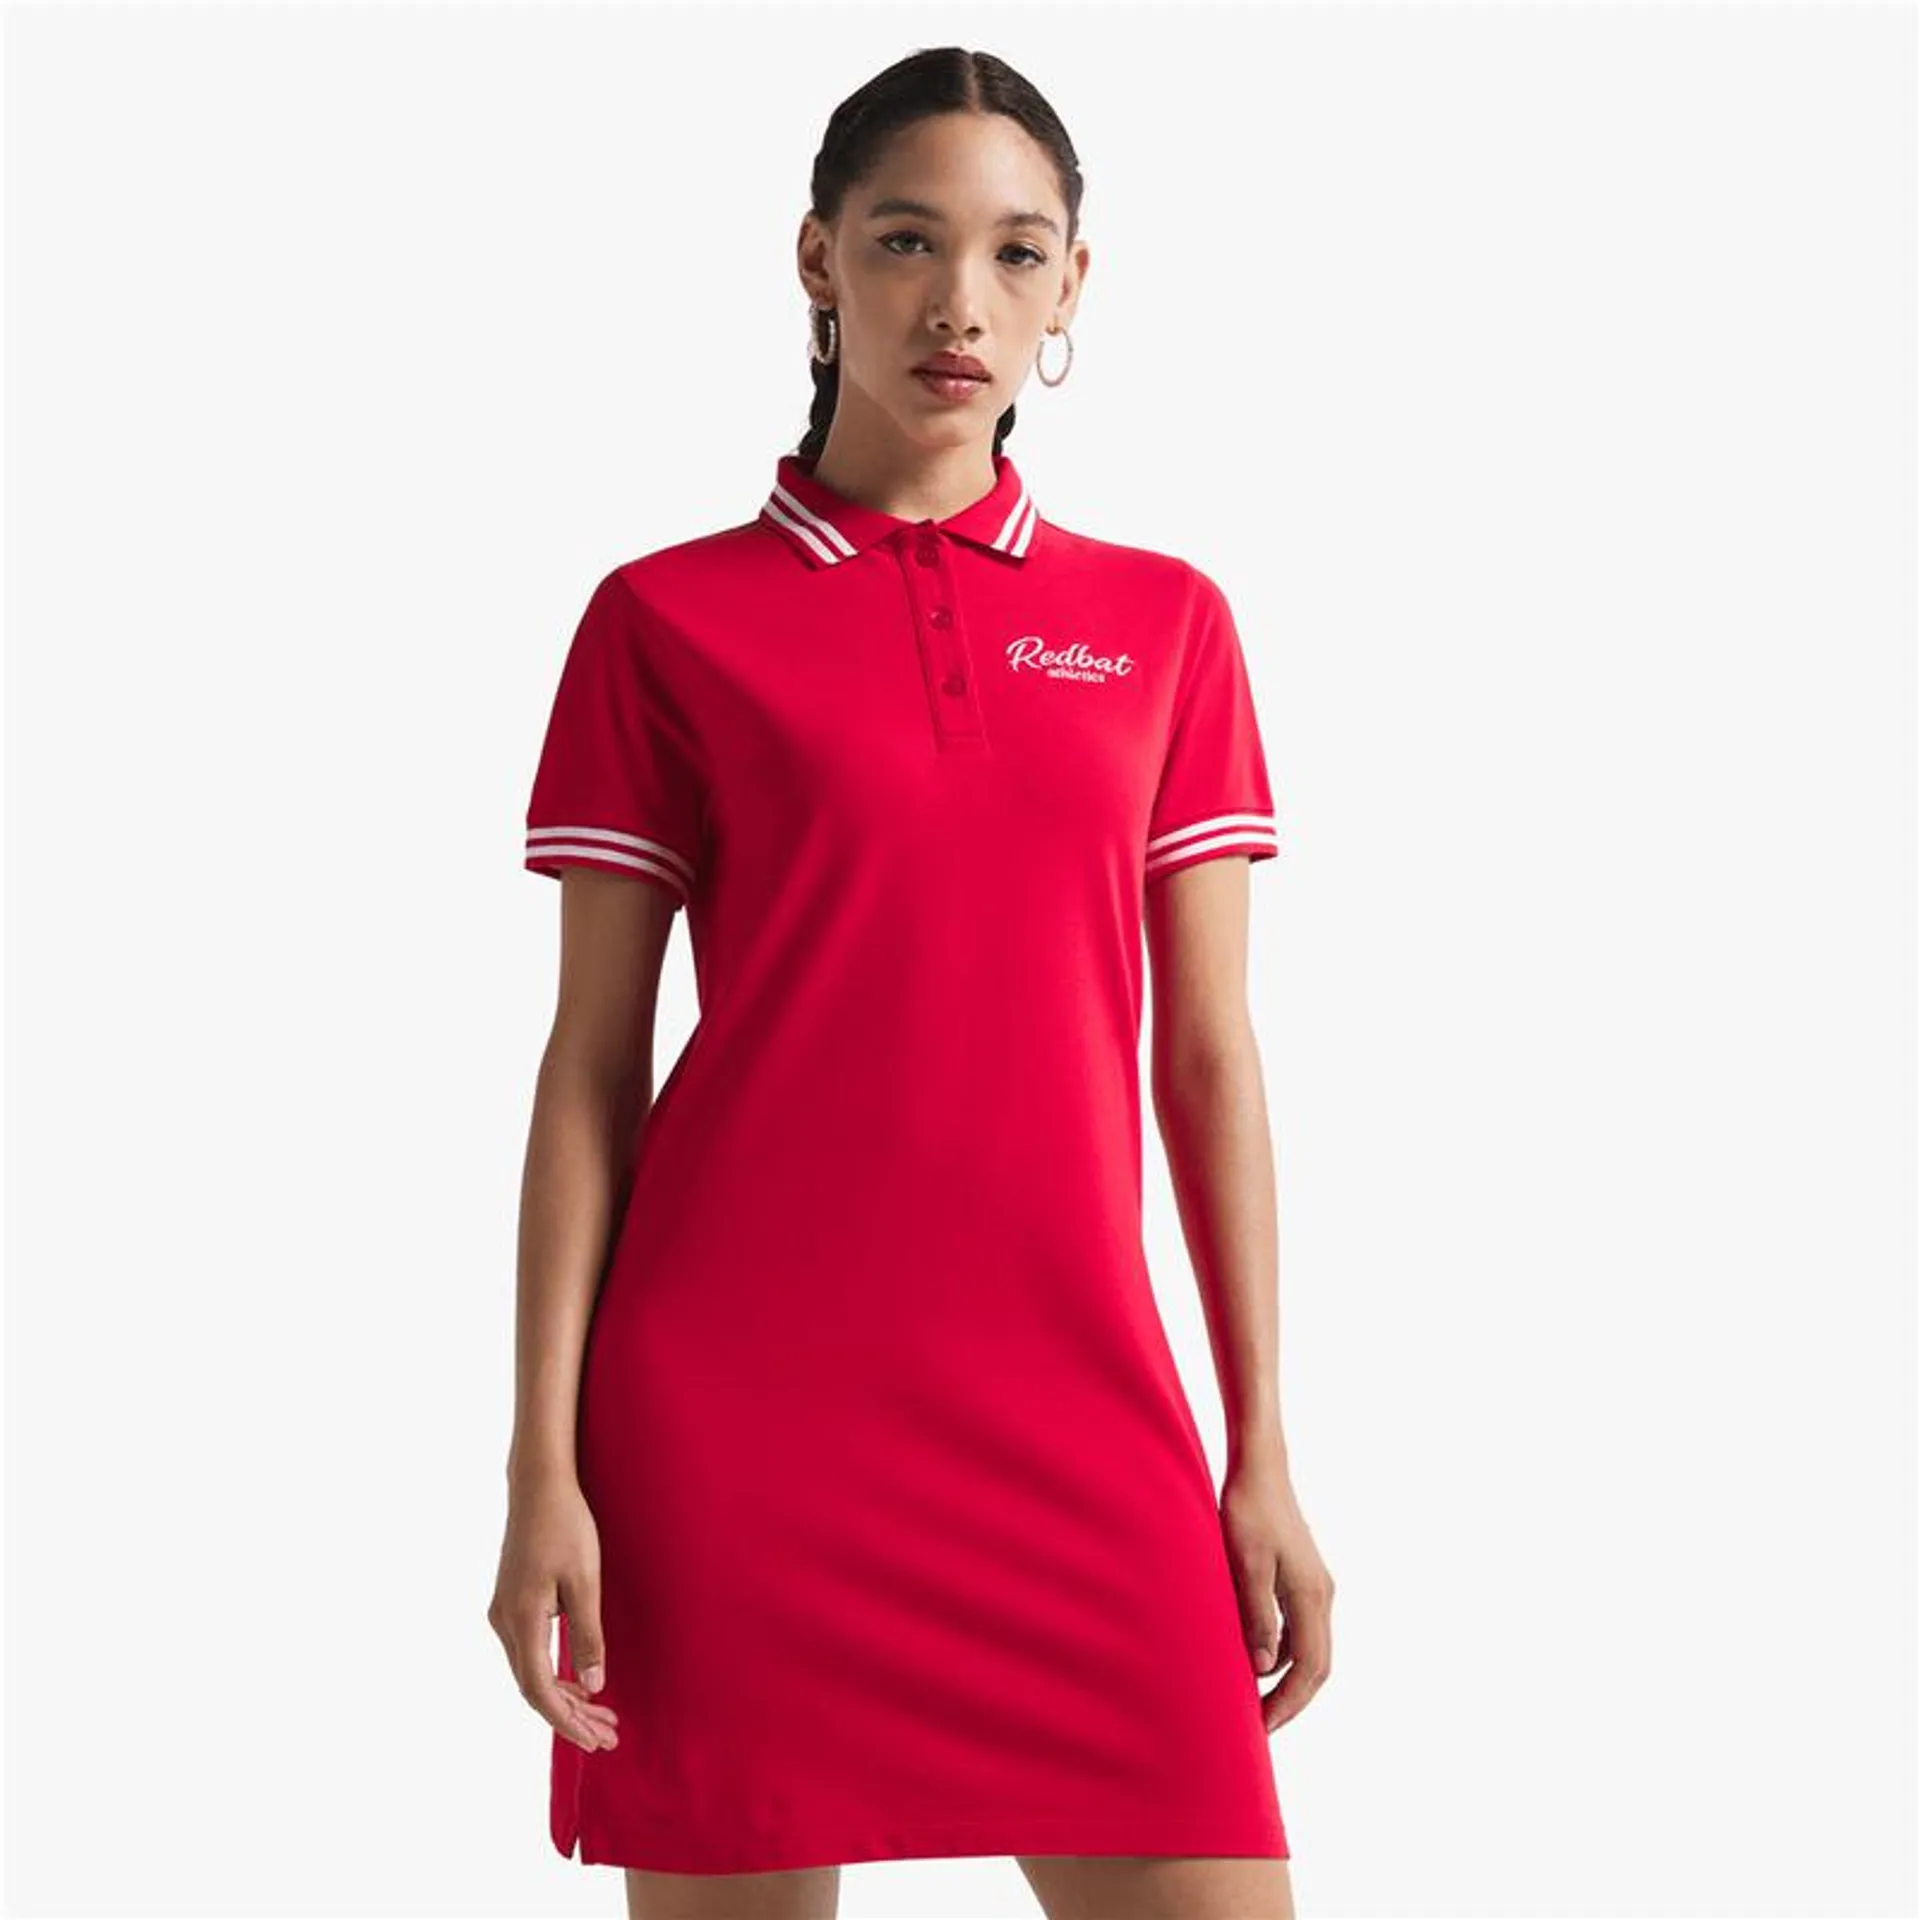 Redbat Athletics Women's Red T-Shirt Dress